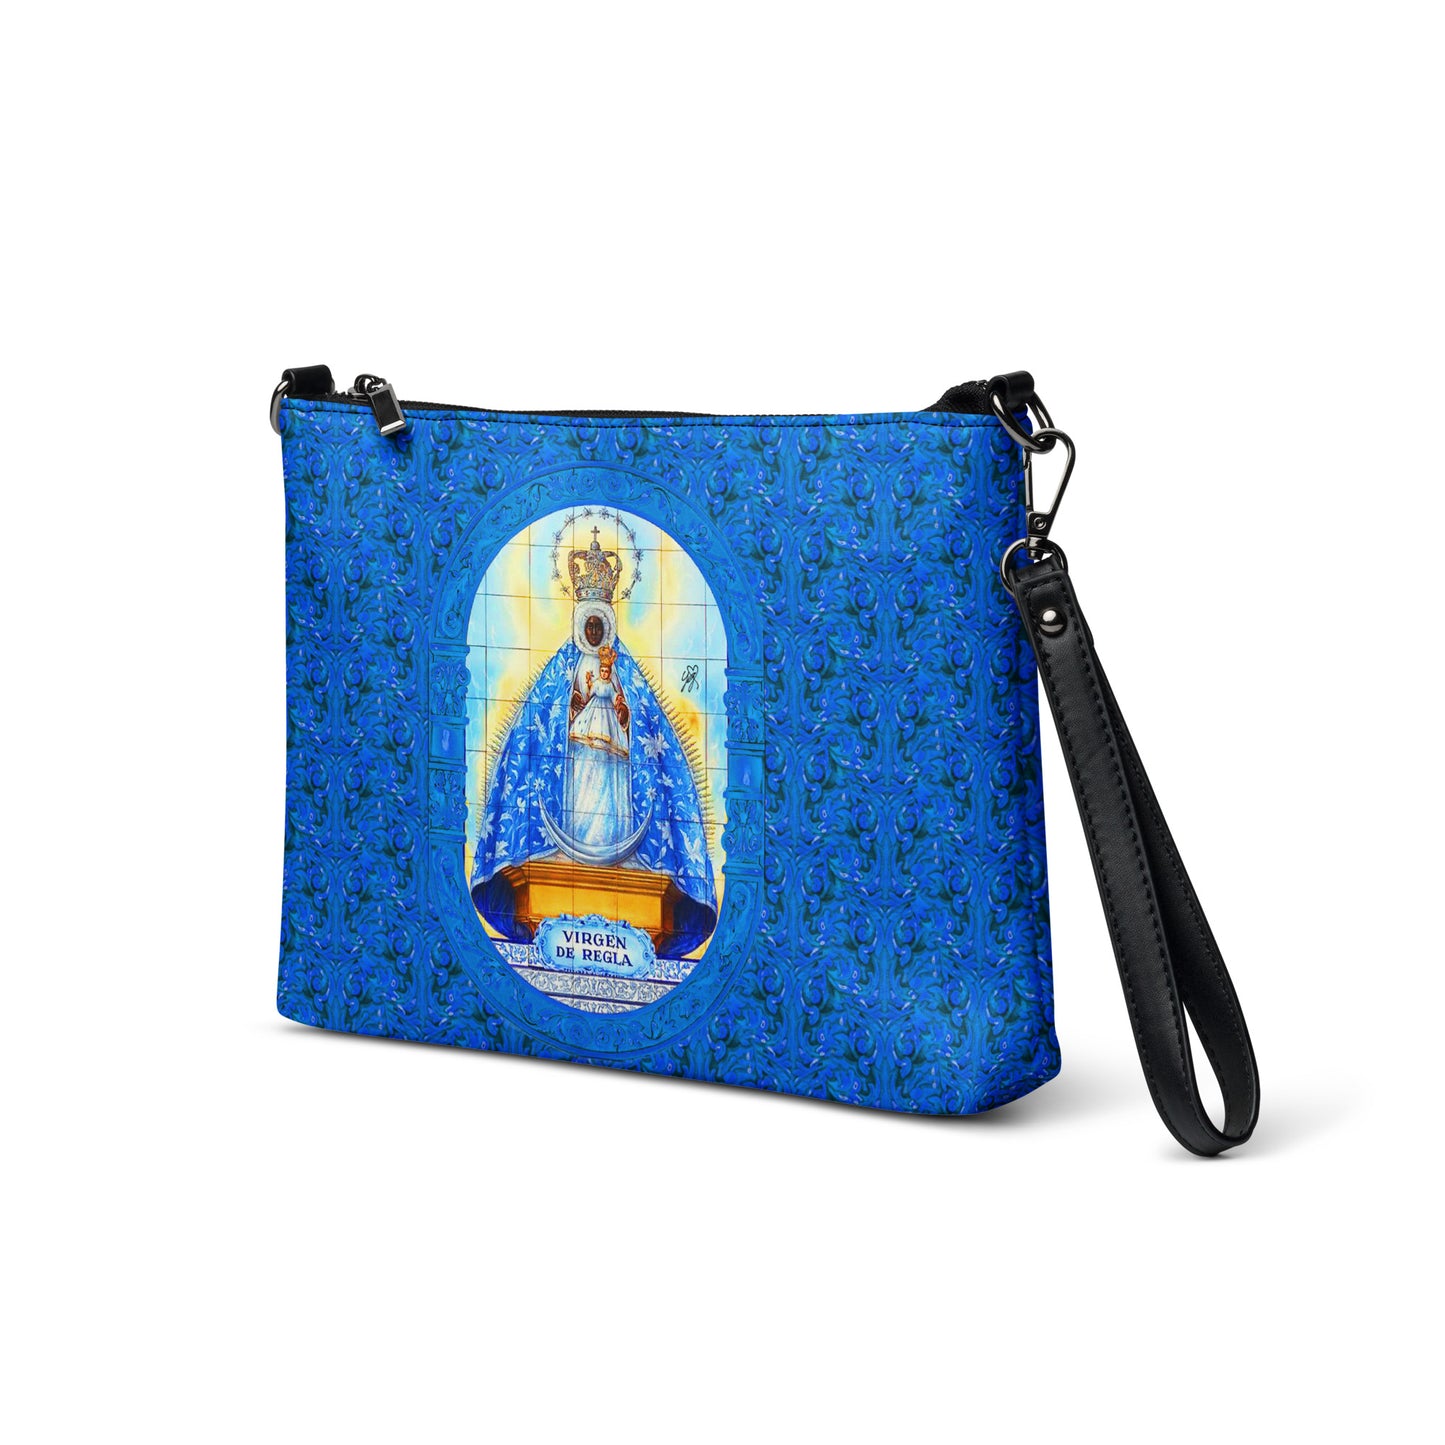 Virgen de Regla Crossbody bag